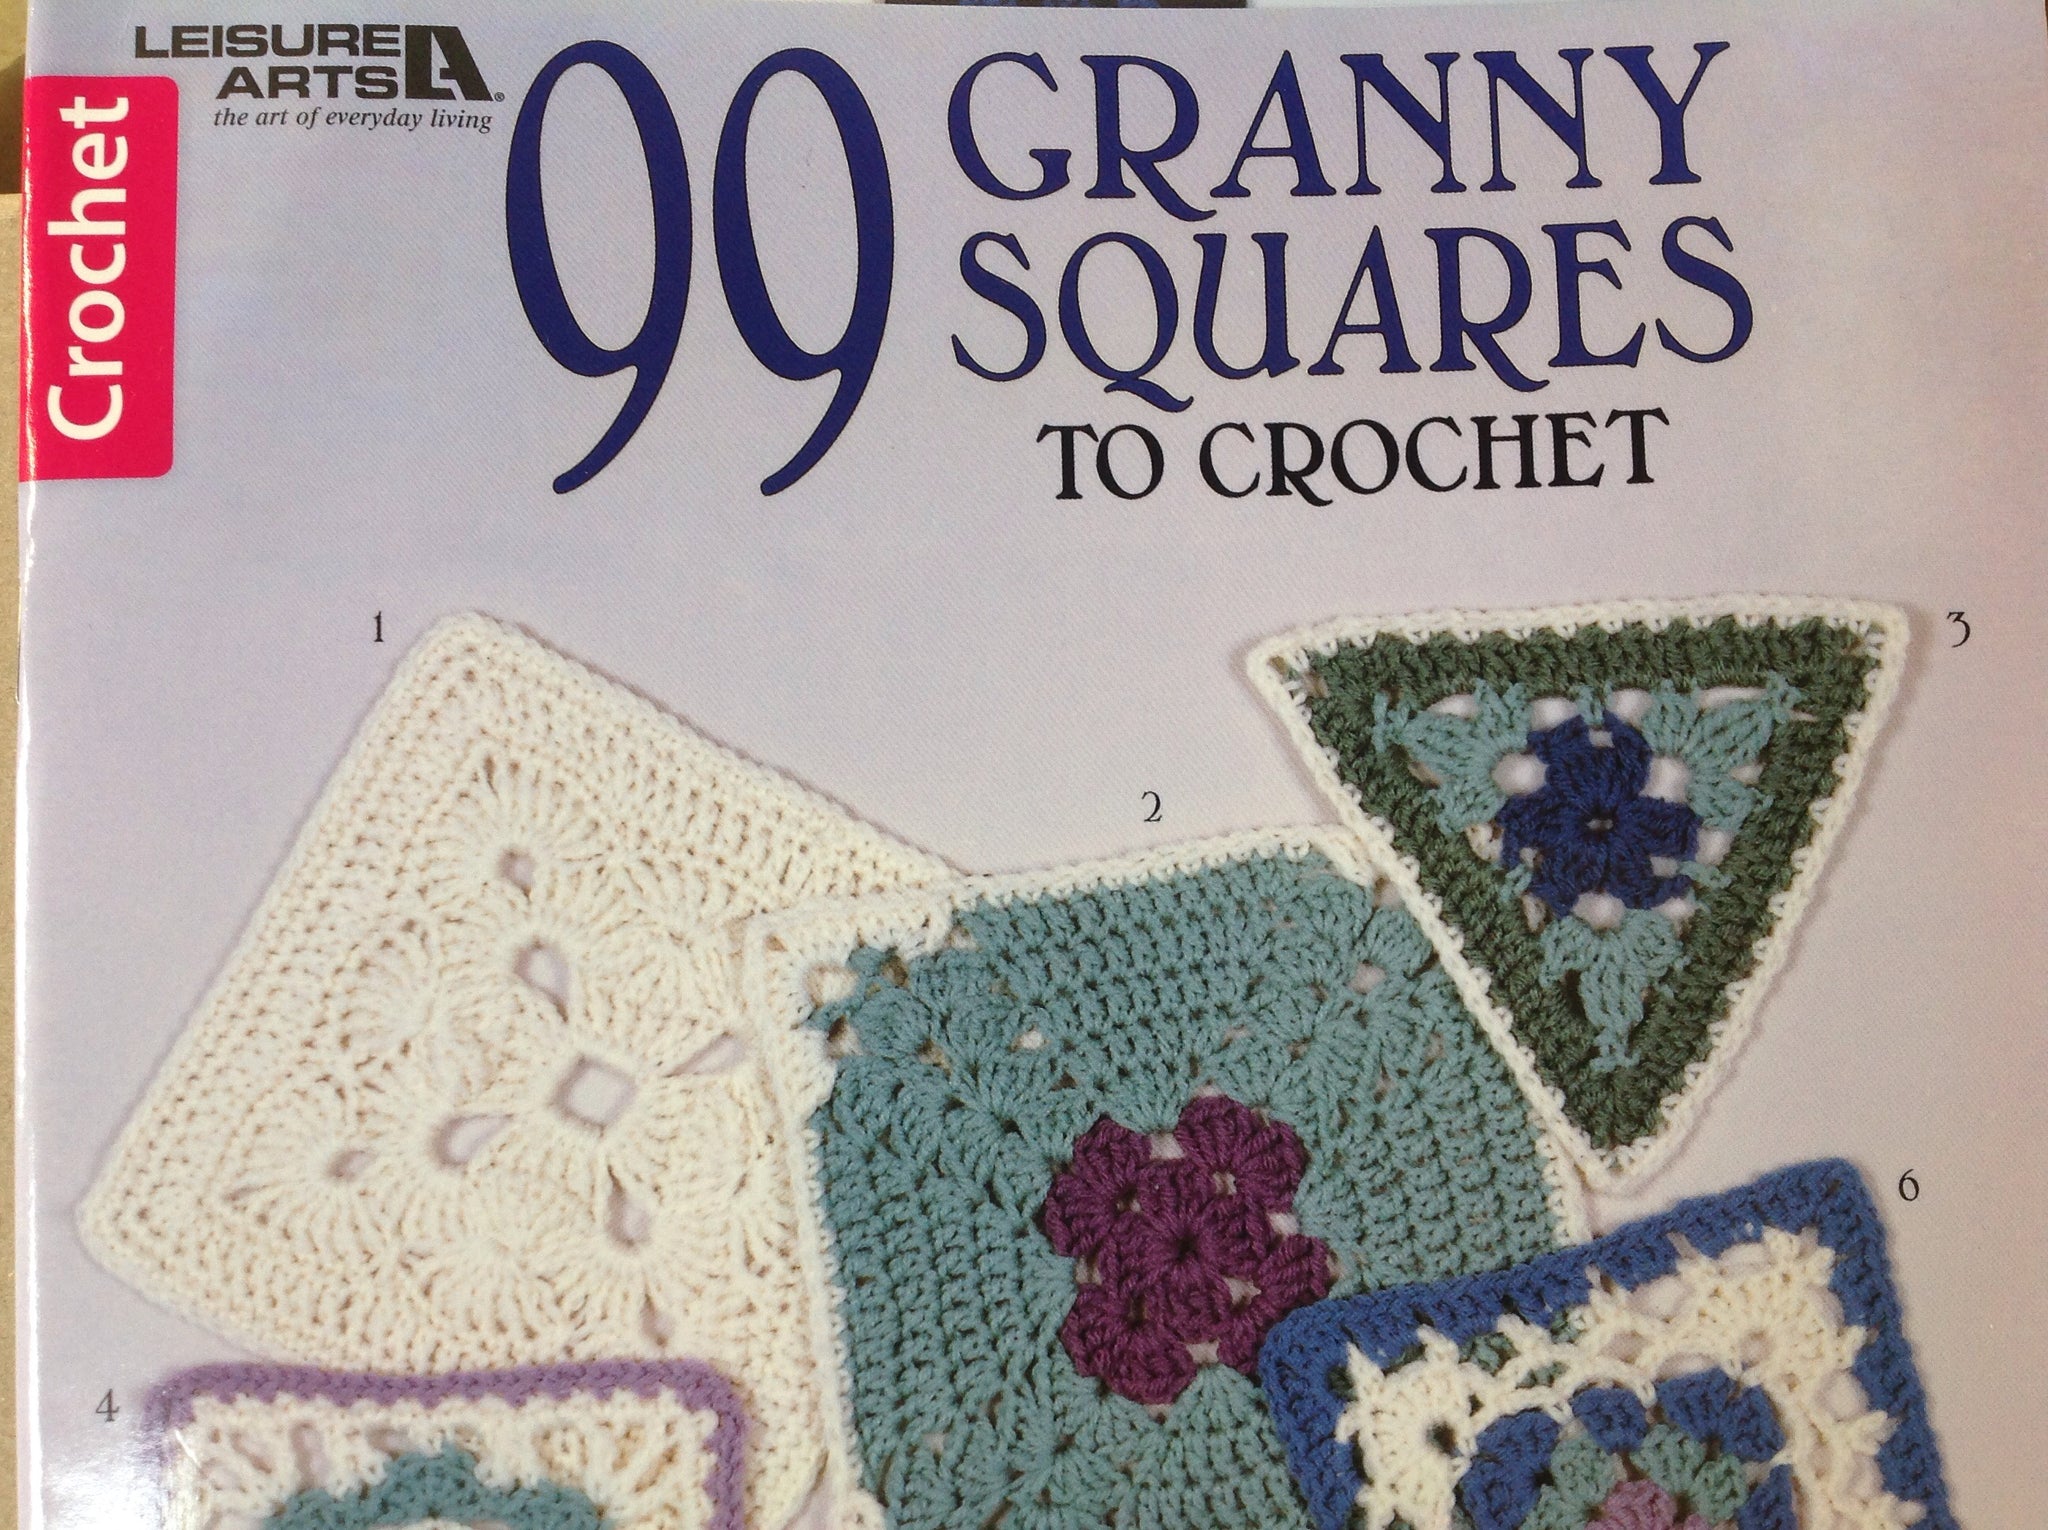 99 Granny Squares to Crochet – Pinkpossum